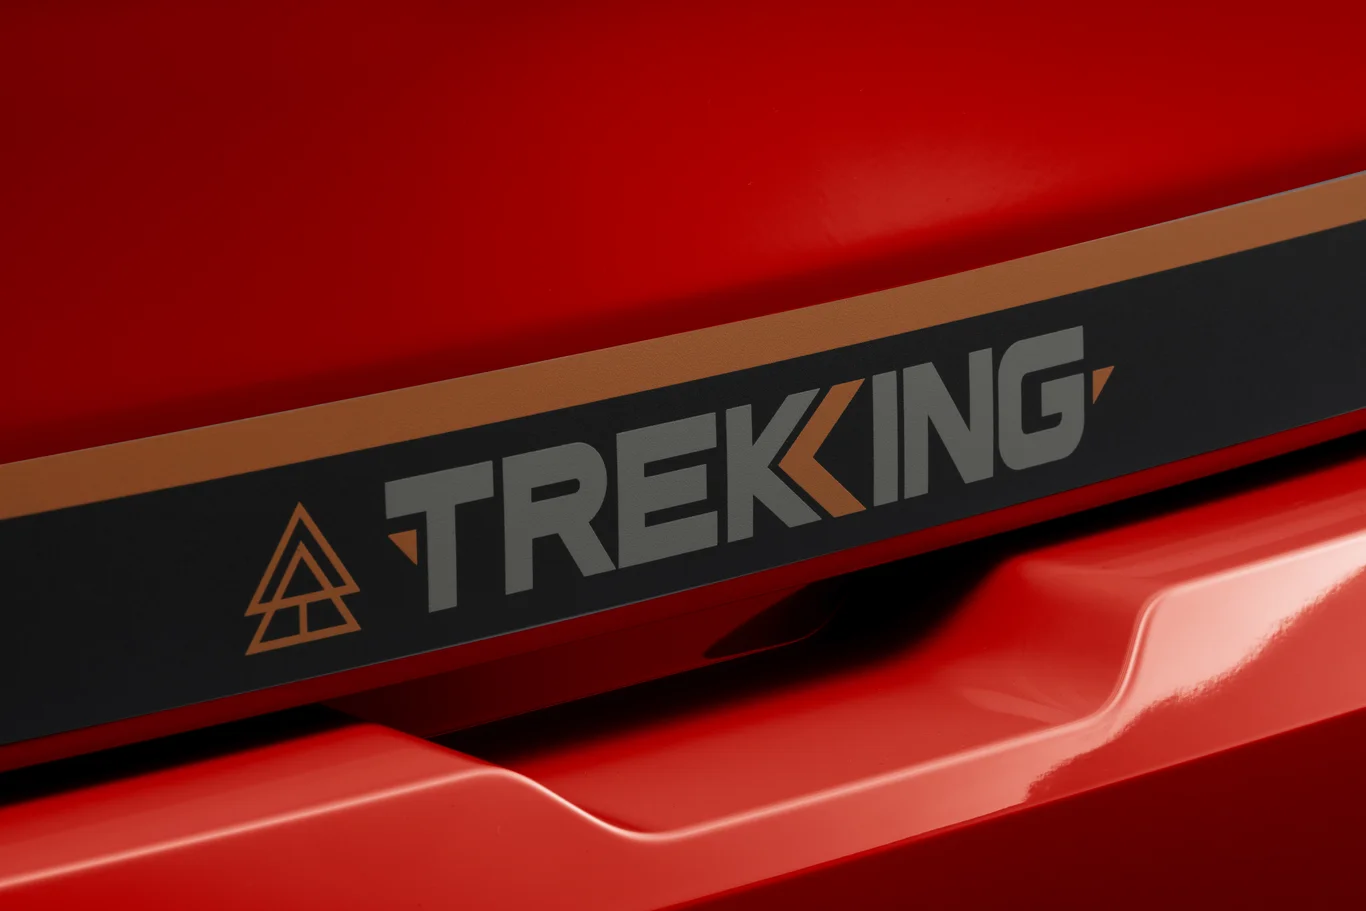 Fiat Argo Trekking 1.3 (Aut.)